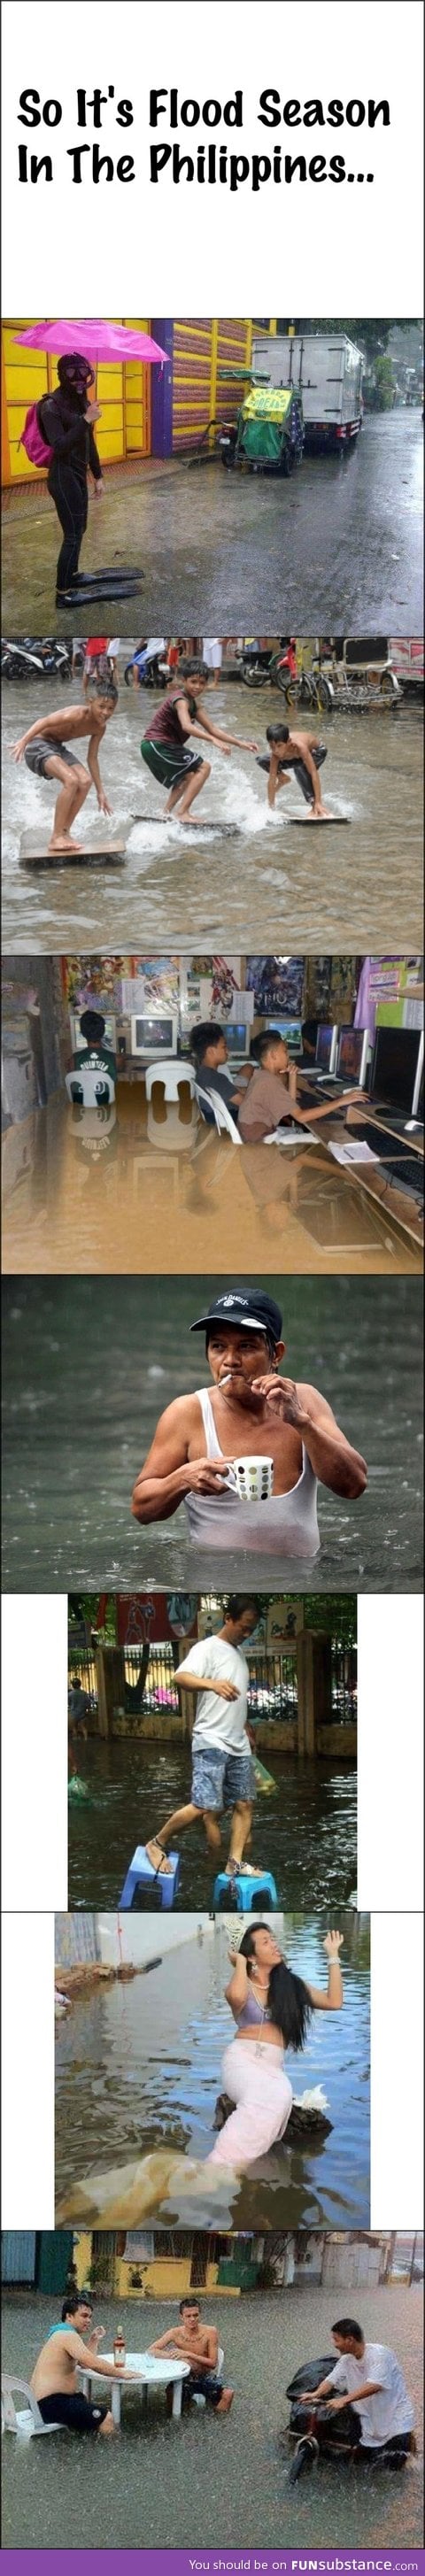 Flood season in the philippines